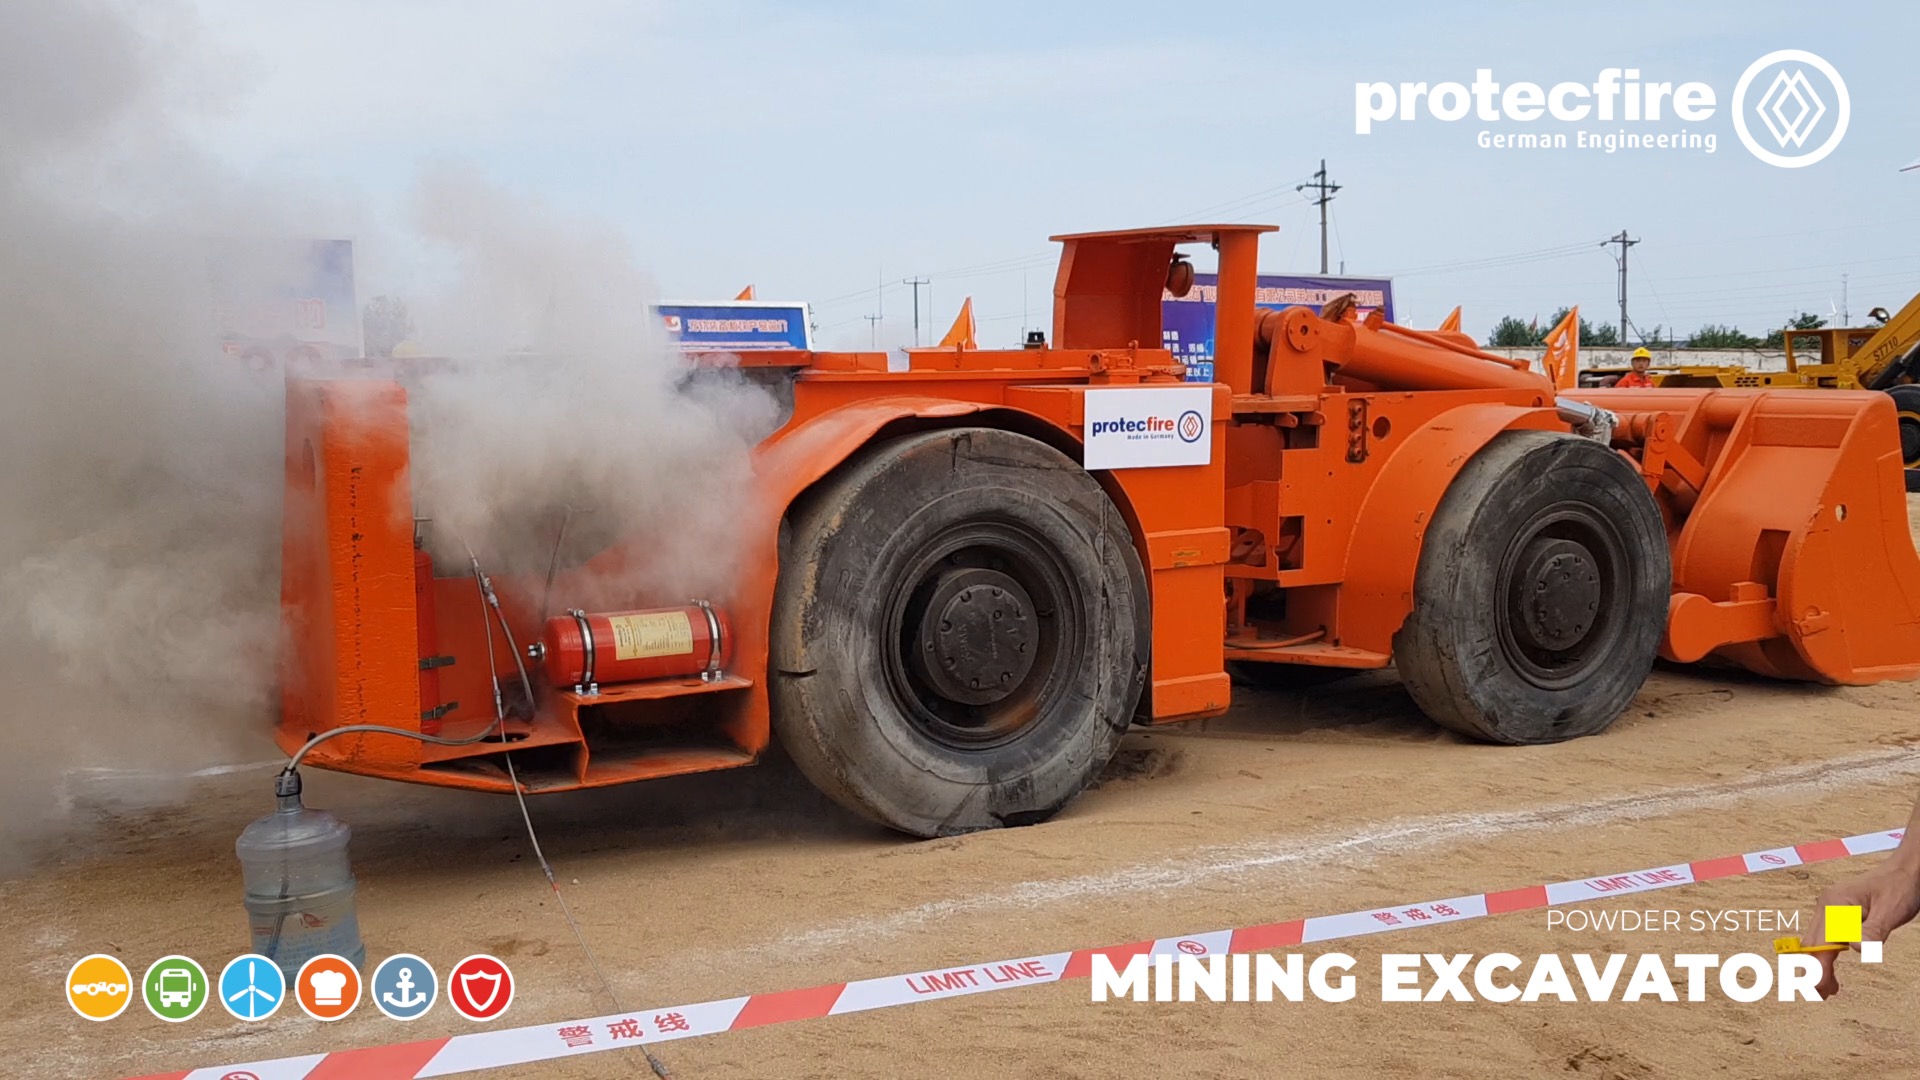 Mining Excavator Fire Test